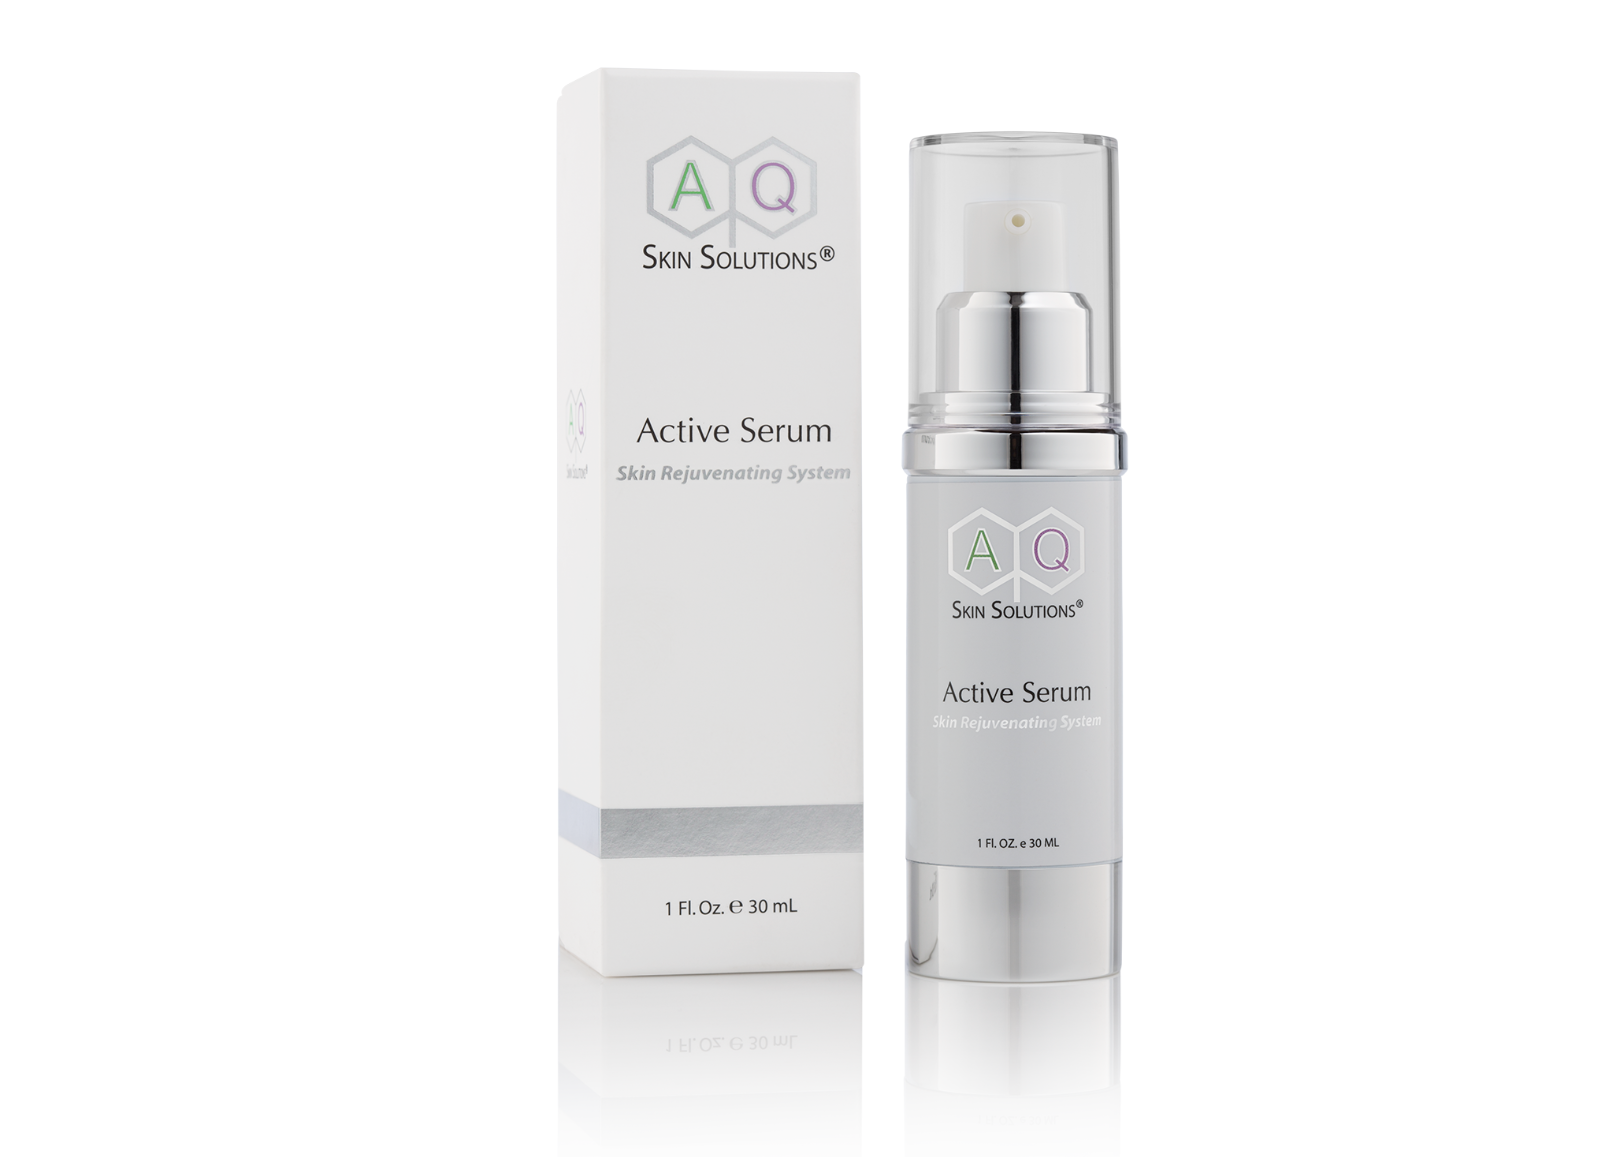 AQ skin solutions active serum